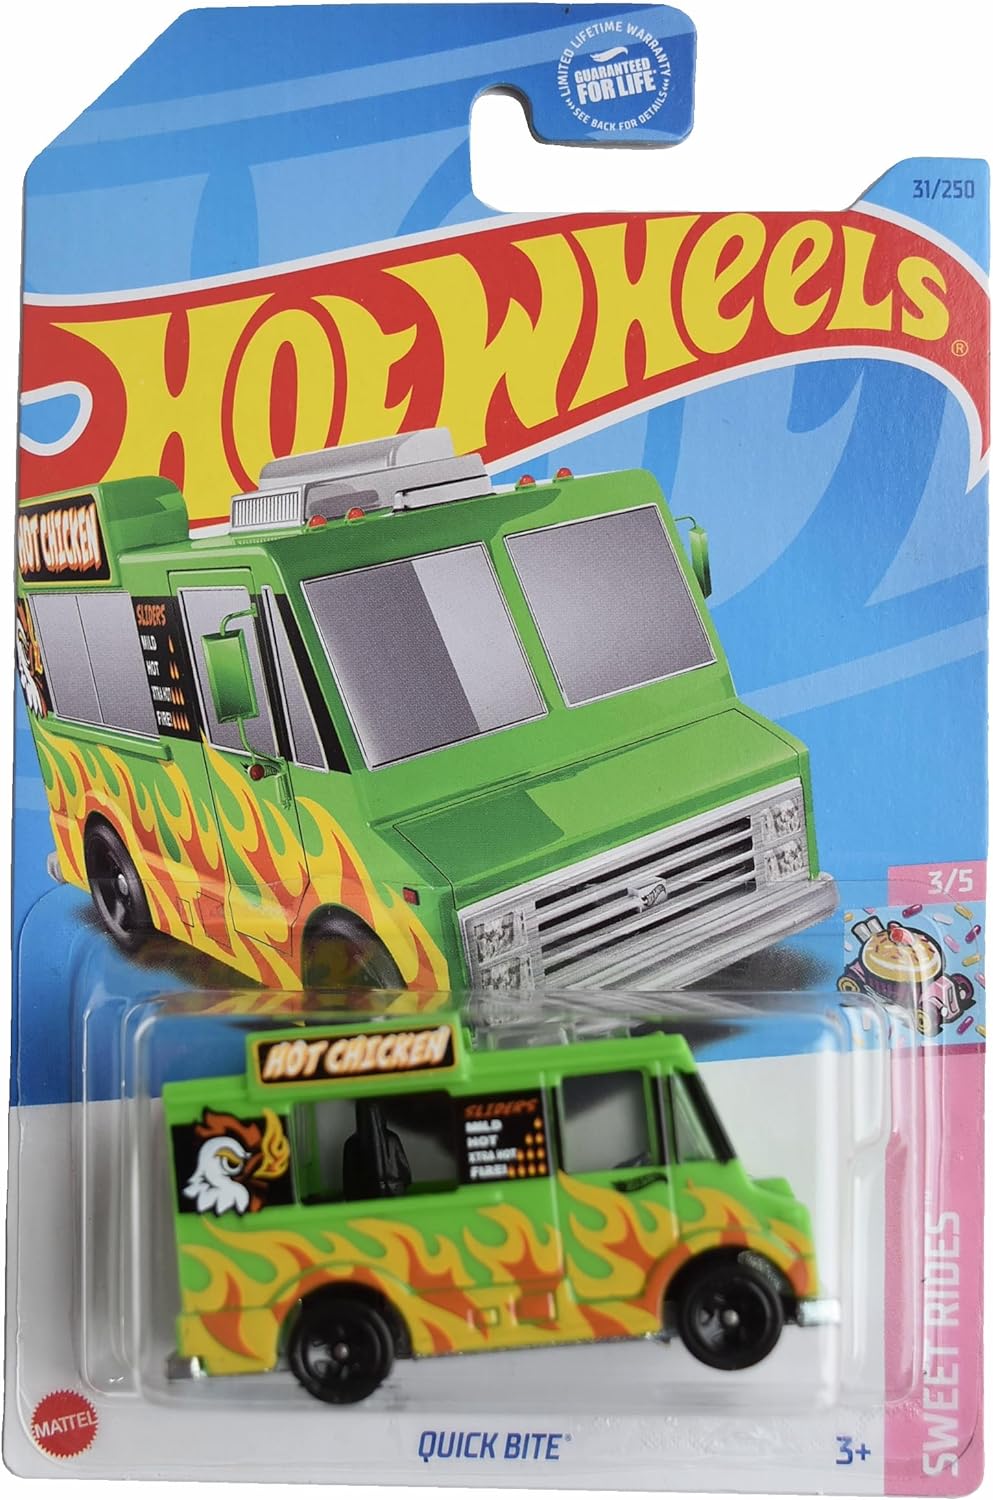 Hot Wheels Quick Bite GREEN Sweet Rides 3/5 31/250